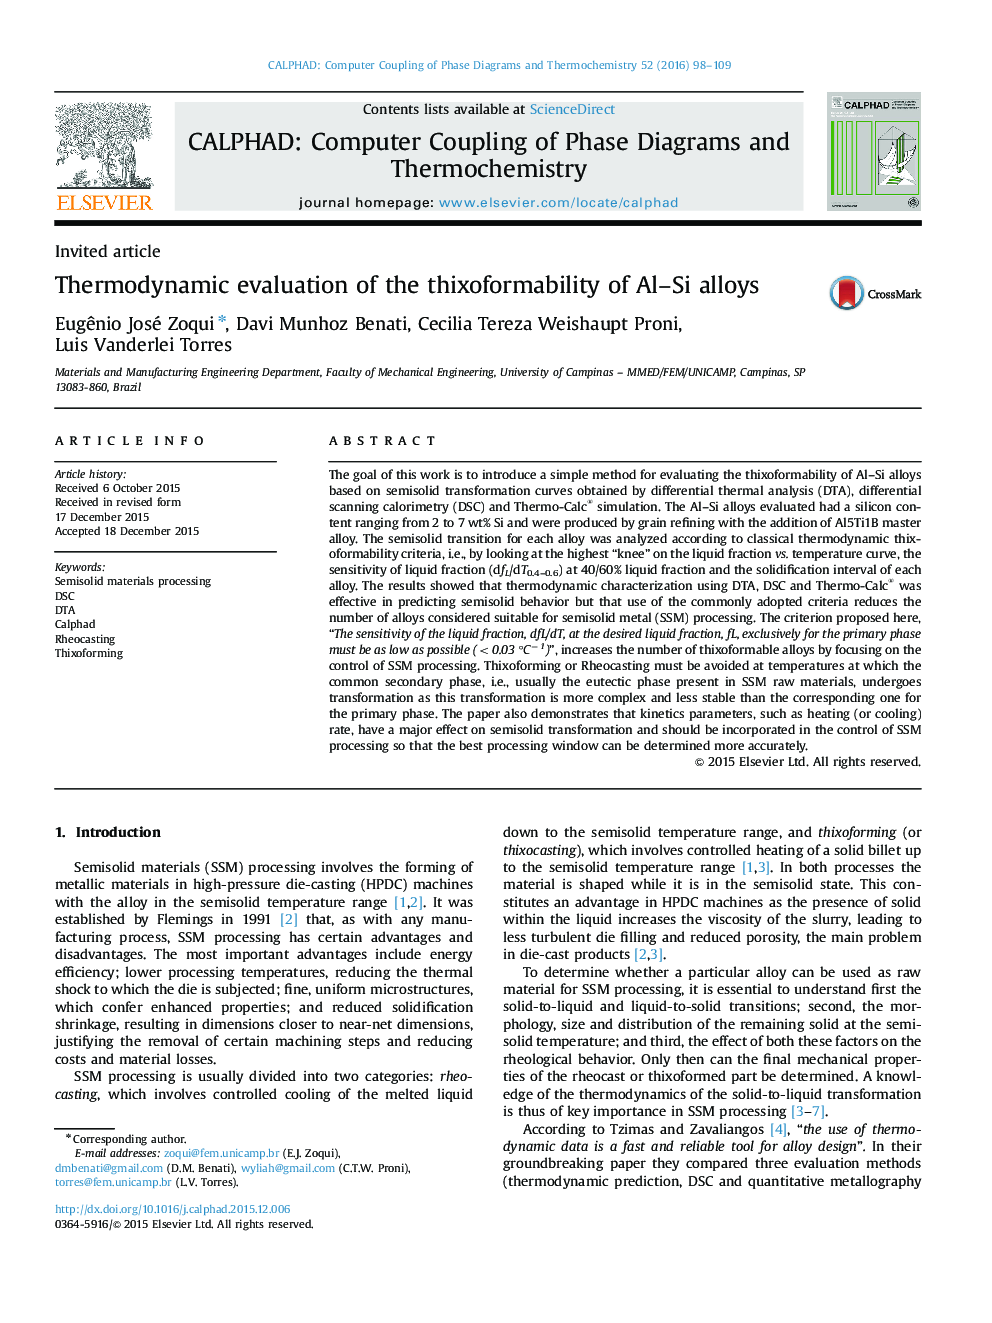 Thermodynamic evaluation of the thixoformability of Al-Si alloys